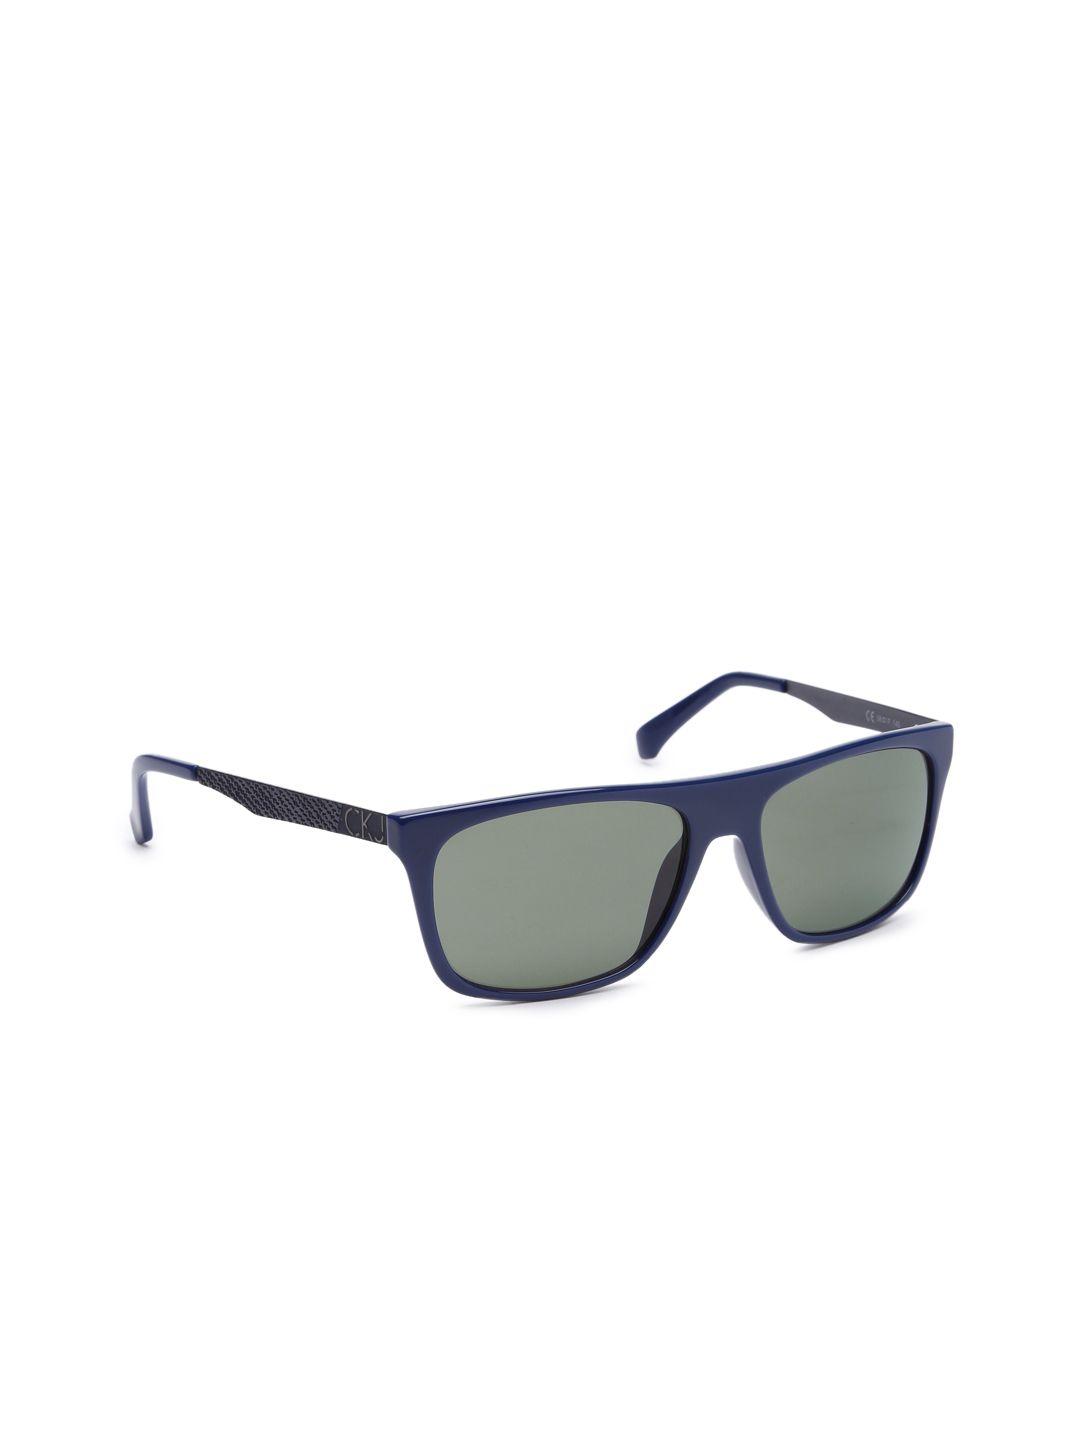 calvin klein jeans unisex rectangle sunglasses 424 400 58 s